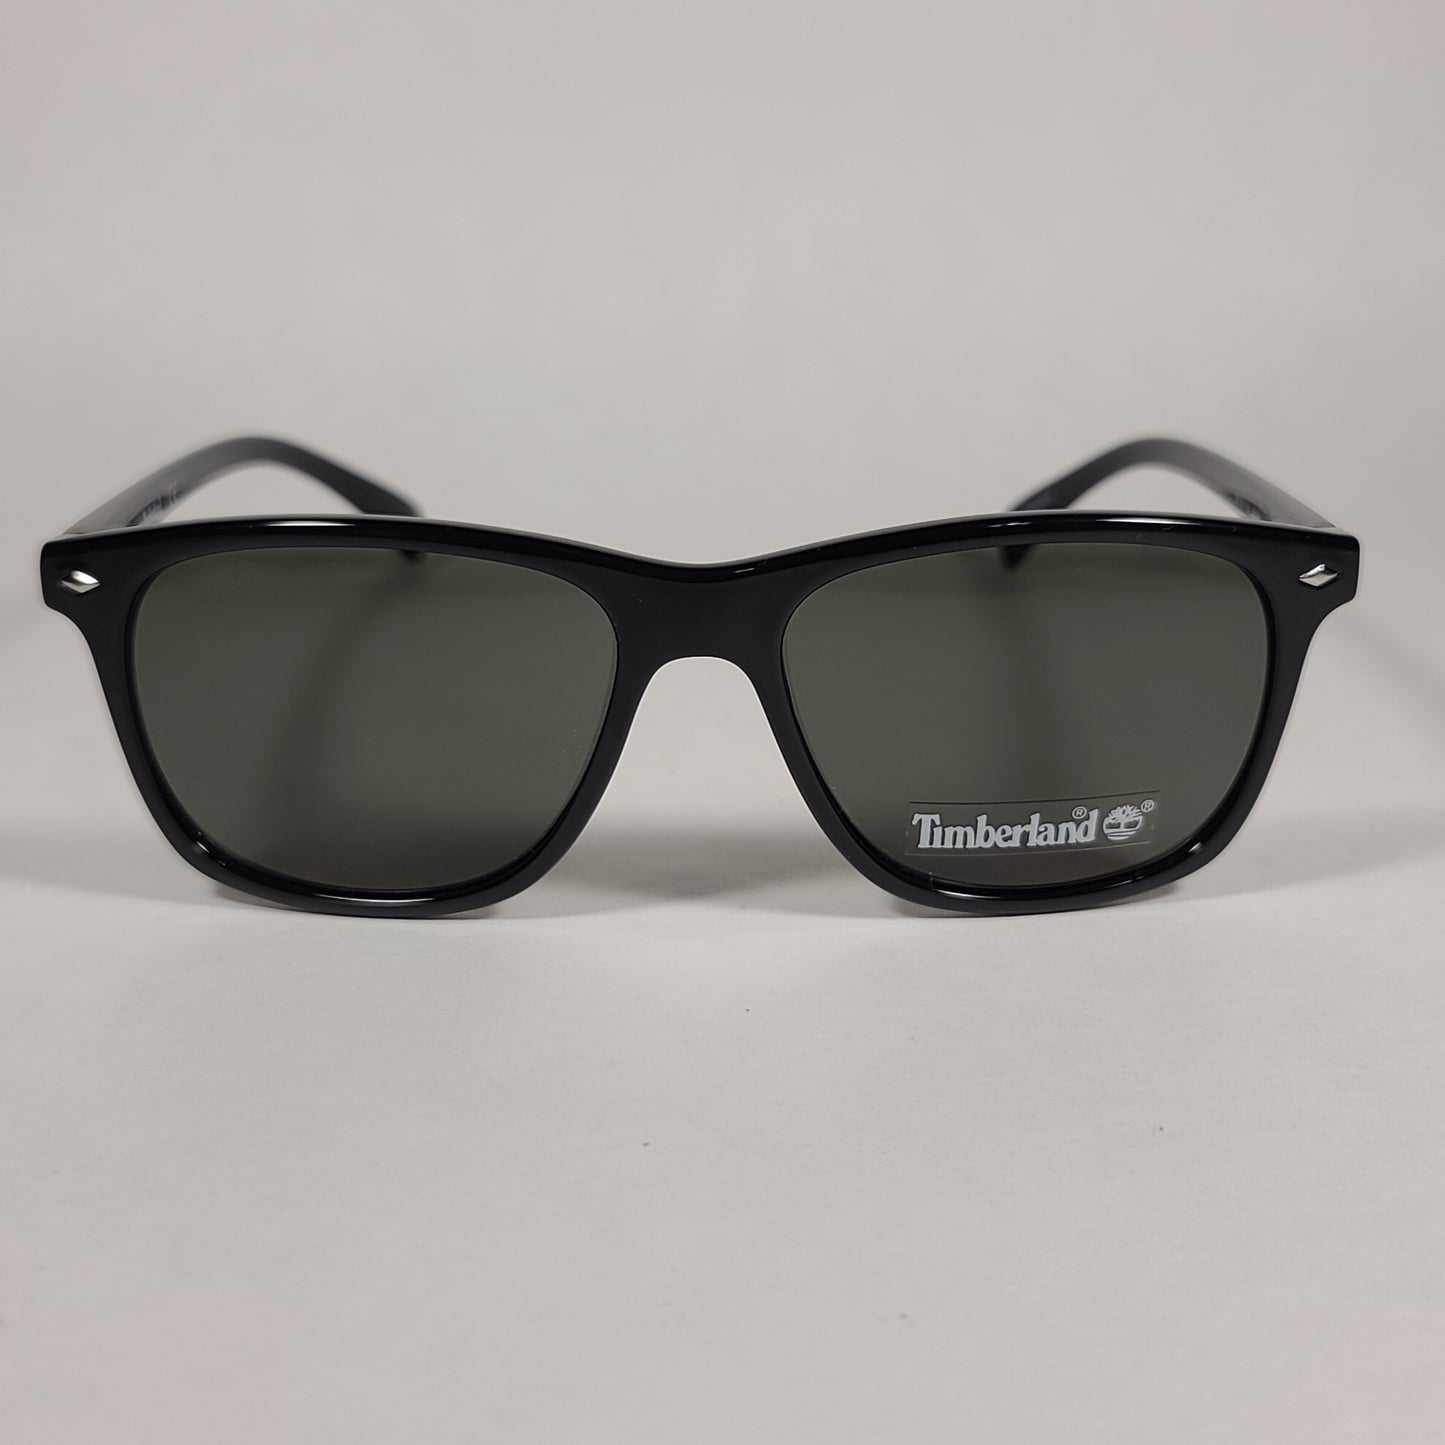 Timberland Square Sunglasses Shiny Black Frame Green Lens TB7140 01N - Sunglasses